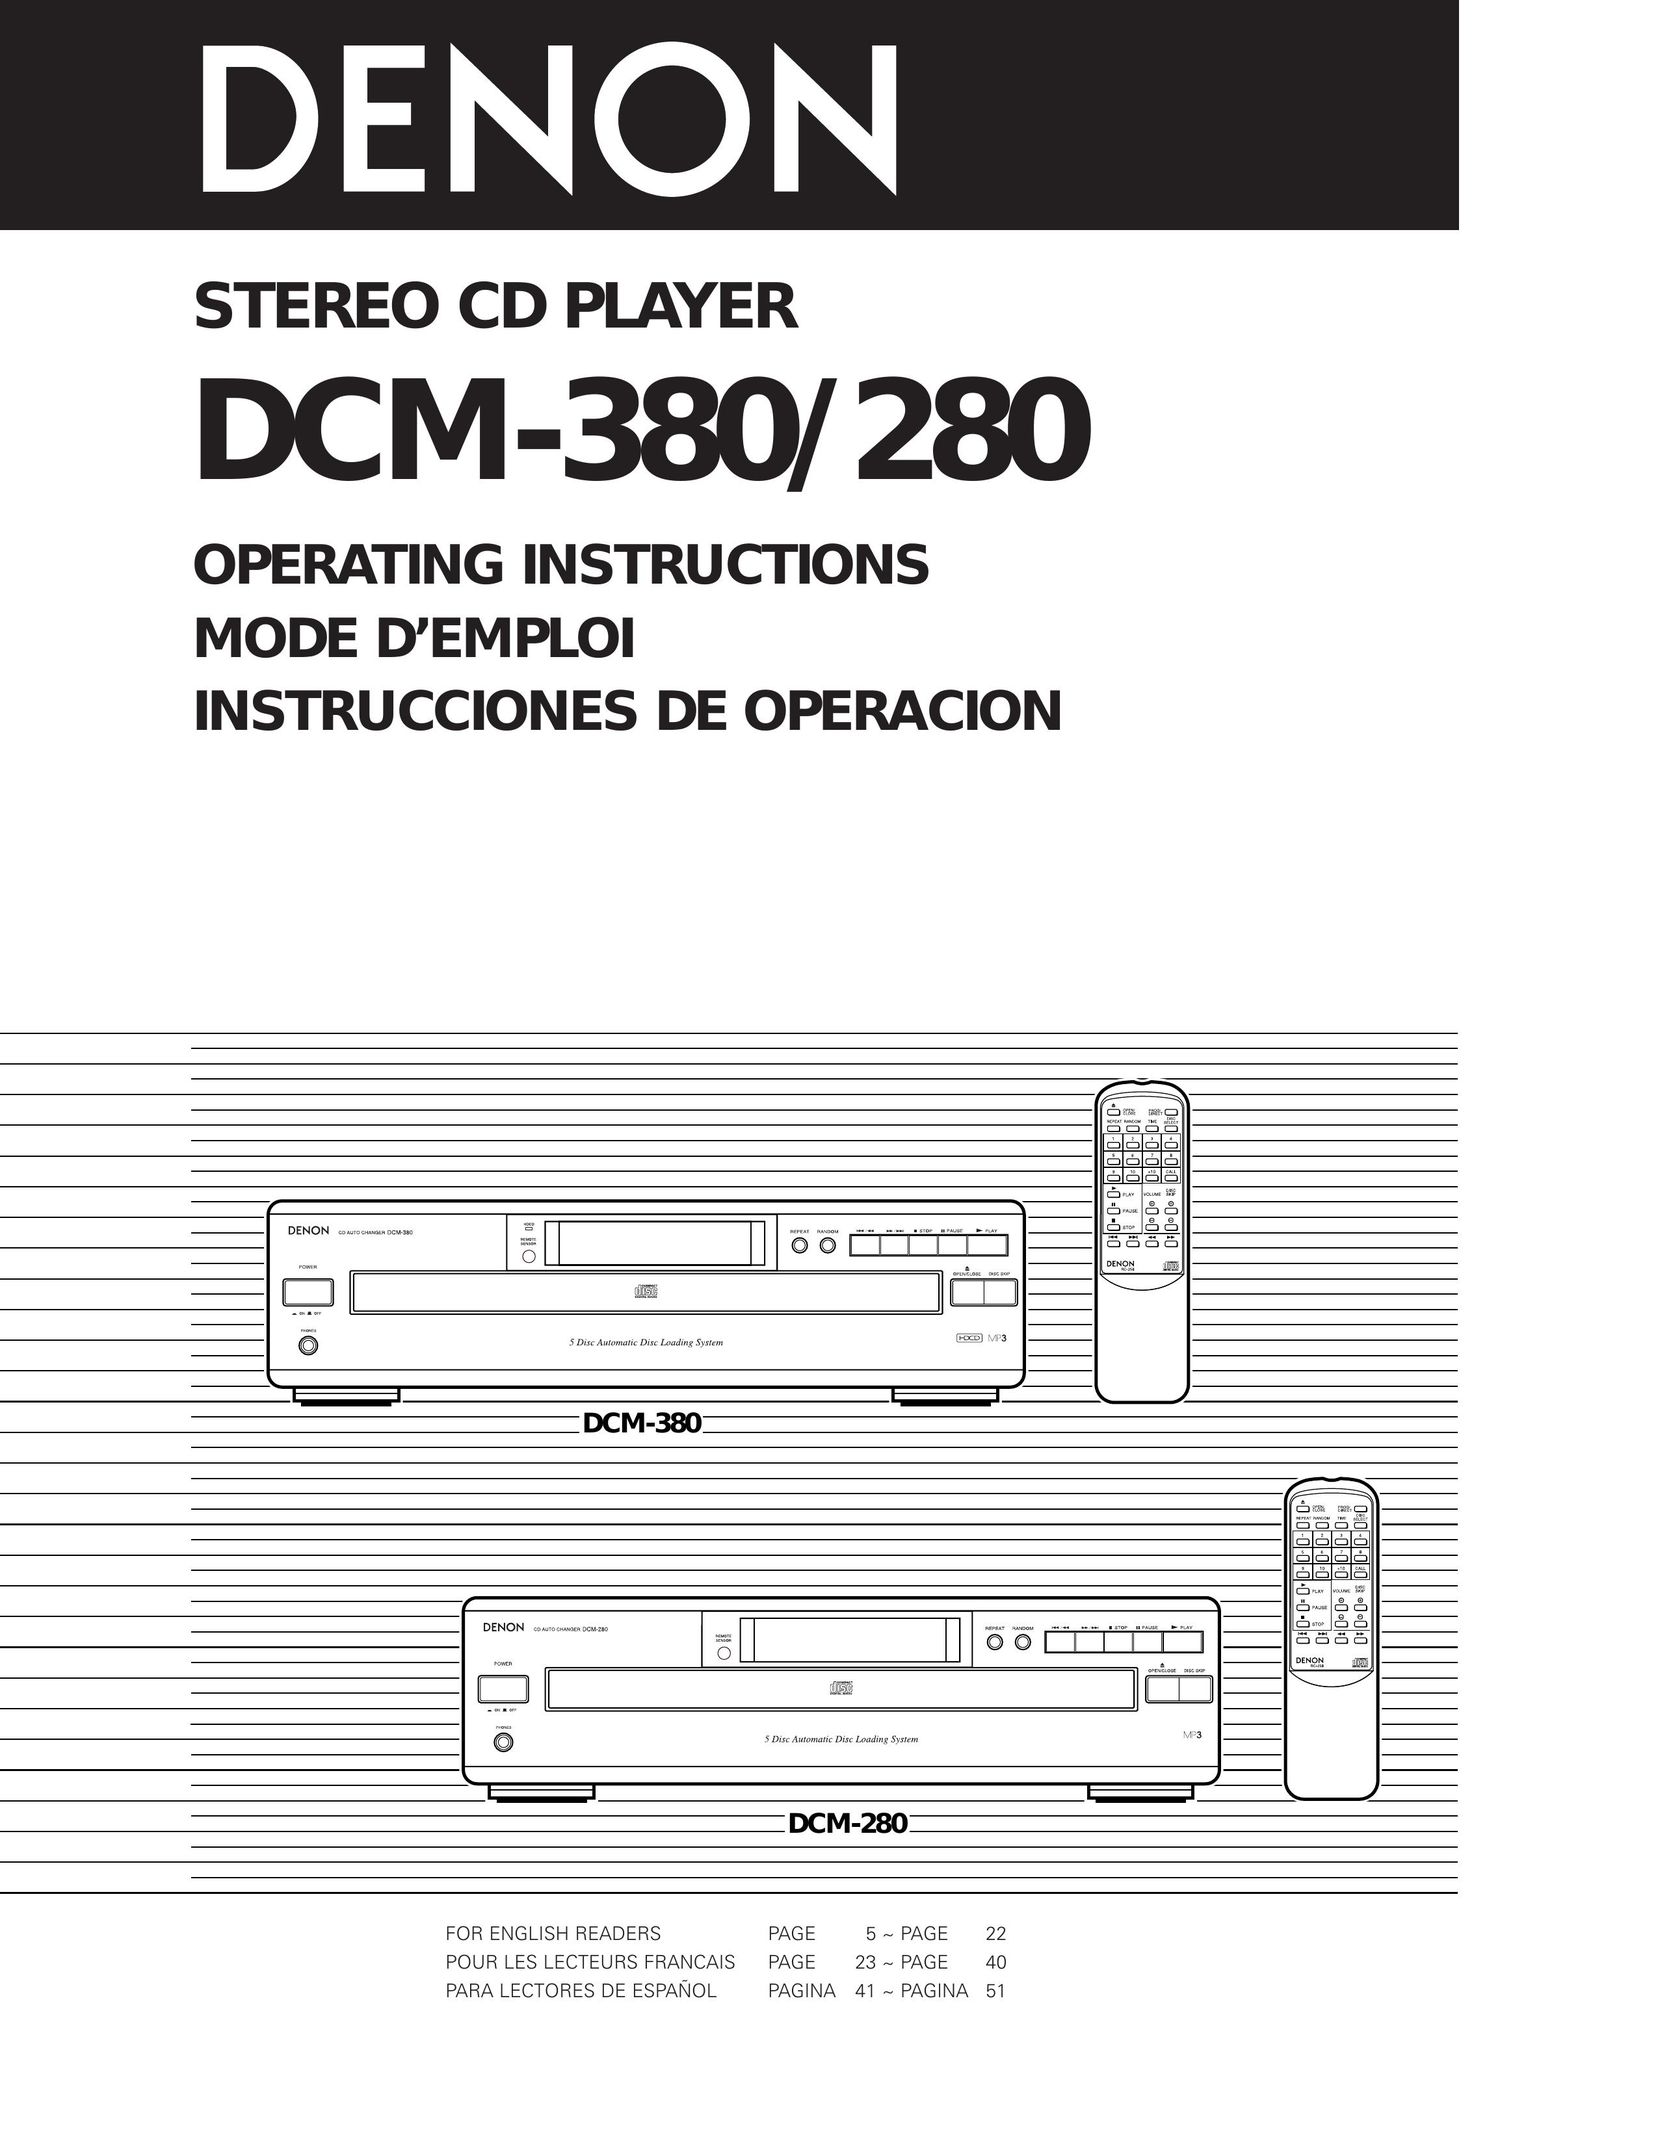 Denon DCM-380 Car Stereo System User Manual